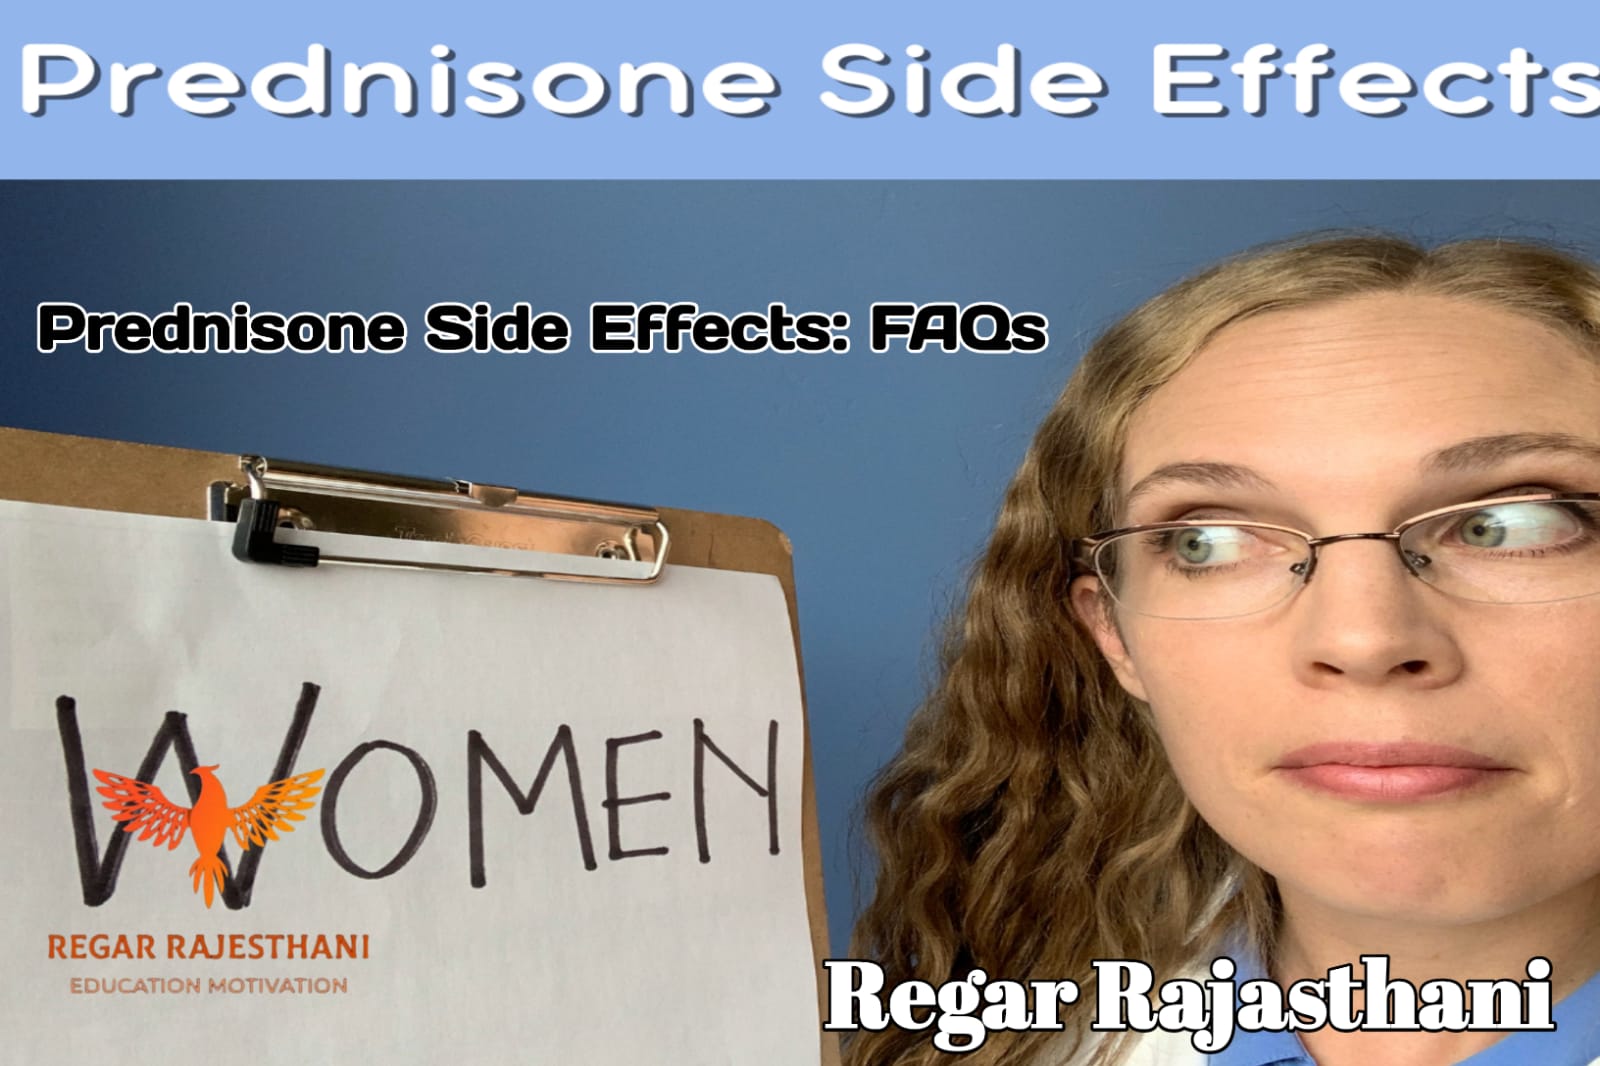 Prednisone Side Effects: FAQs